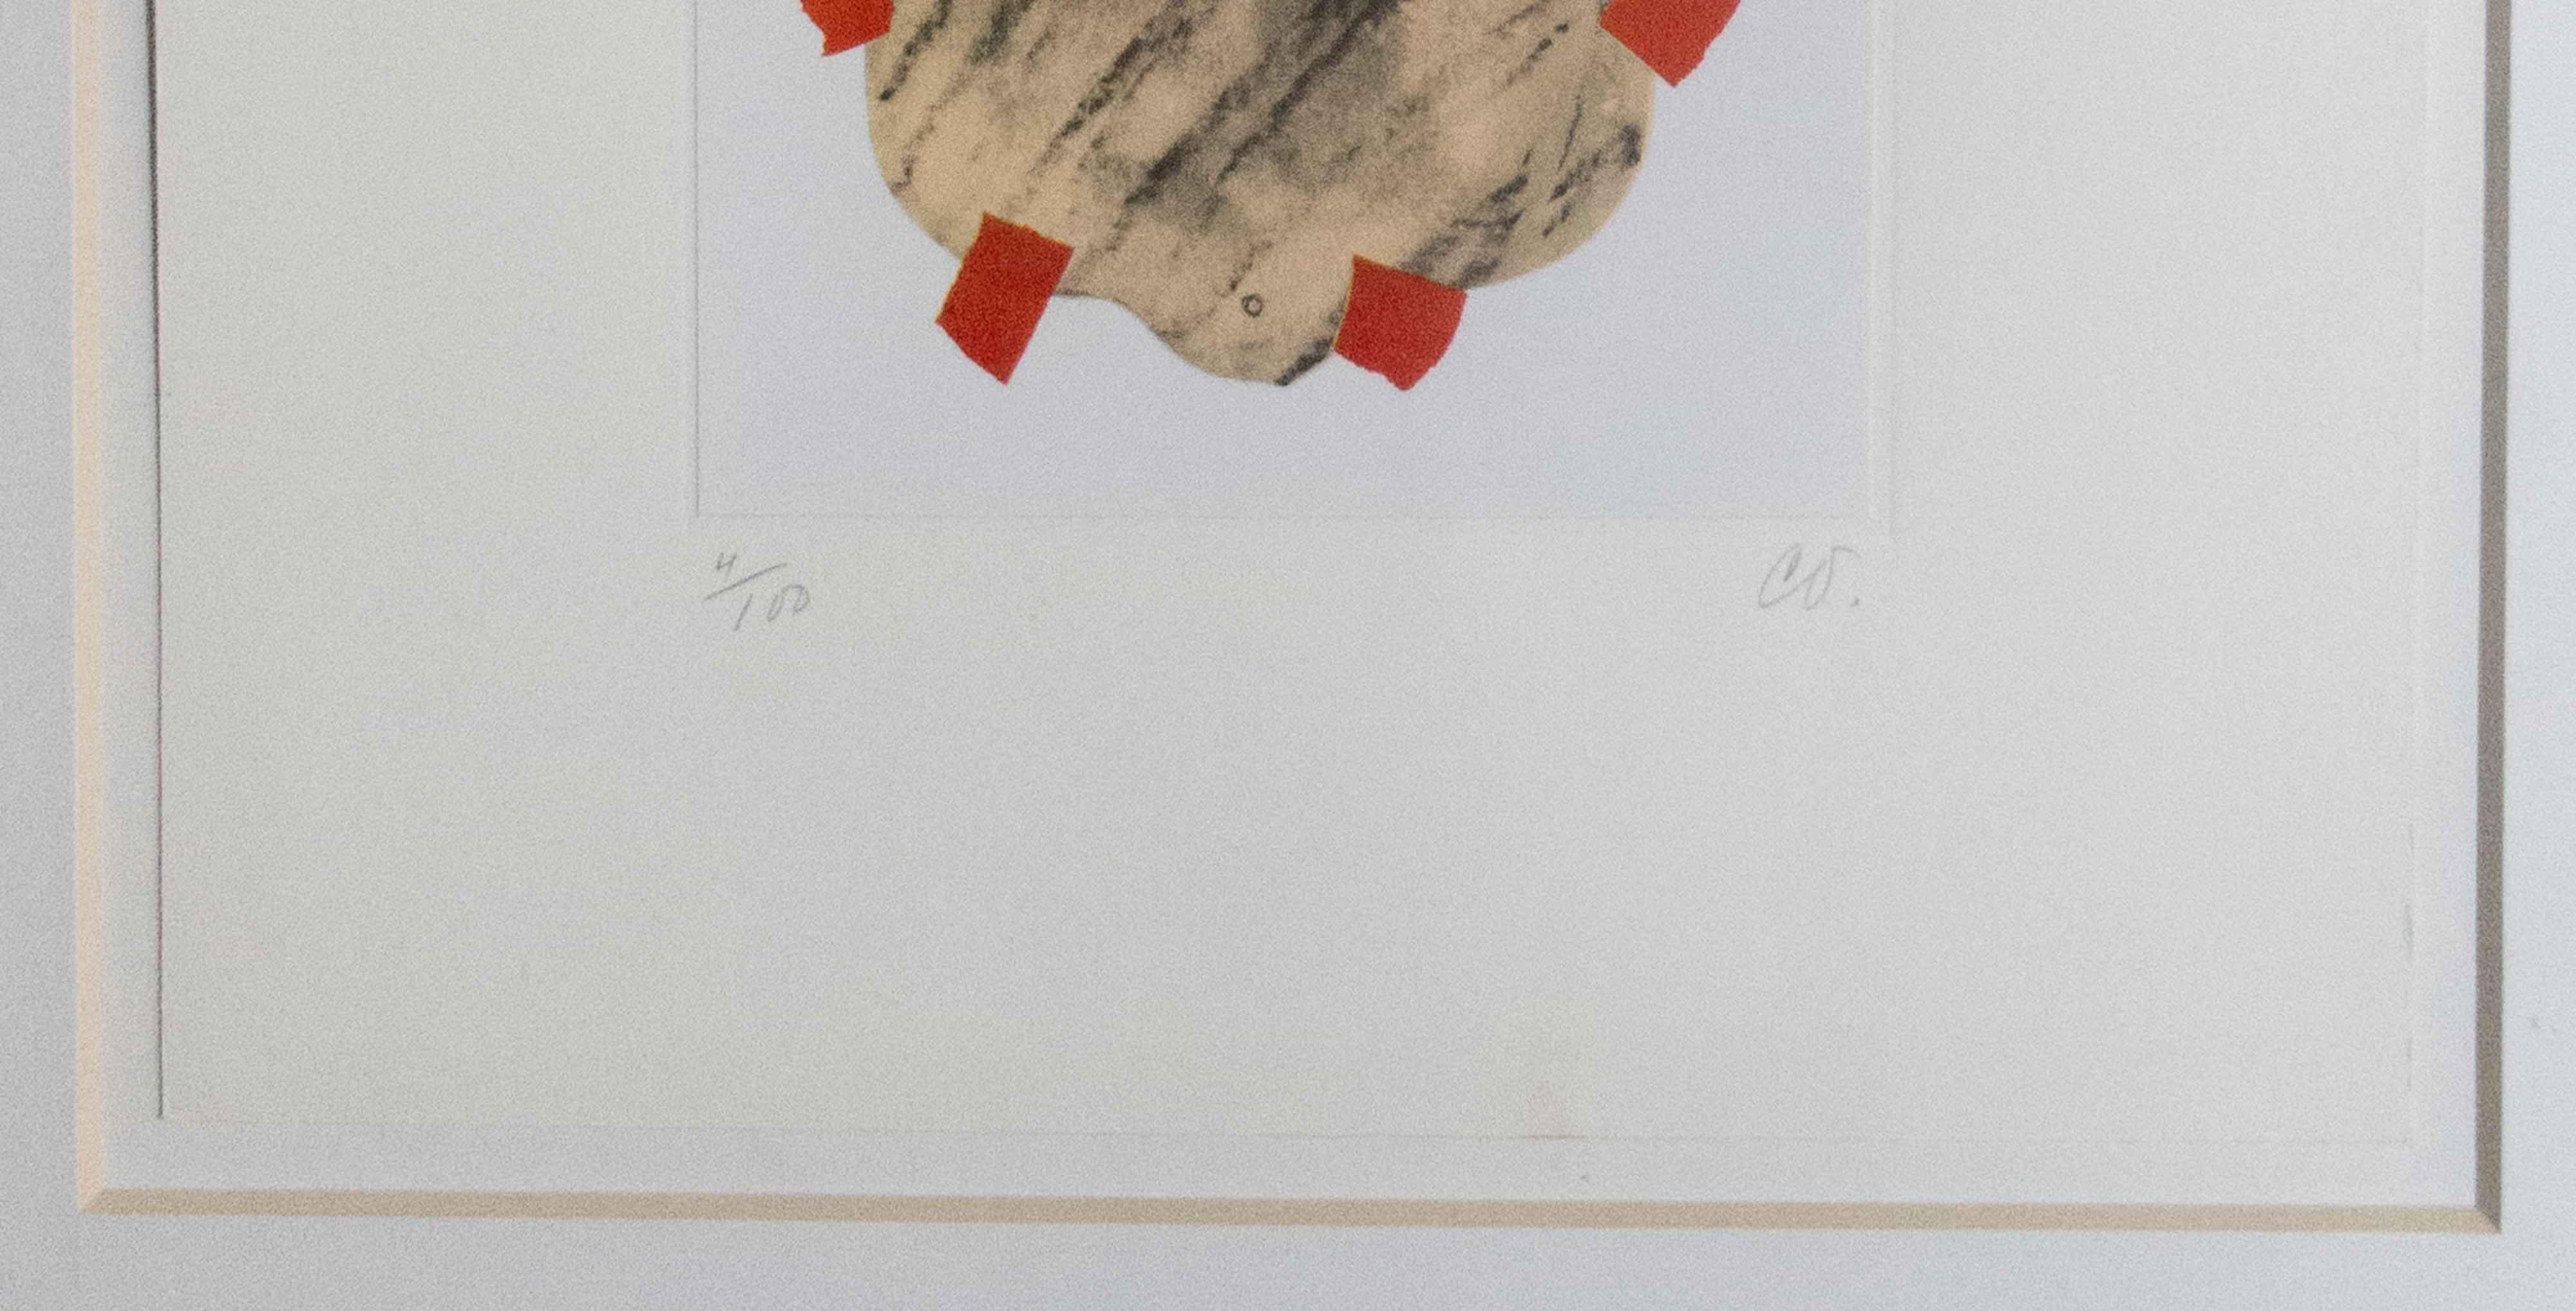 Claes Oldenburg 
Child's Hot Water Bottle, London, 1968
Dal portfolio Notes in Hand 
1972 
Litografia offset
cm. 14,8 x 10,4 (lastra)
cm. 25 x 20 (carta) 
cm. 52 x 47 (Cornice)
Sigla a matita sul margine in basso a destra “CO”, tiratura in basso a